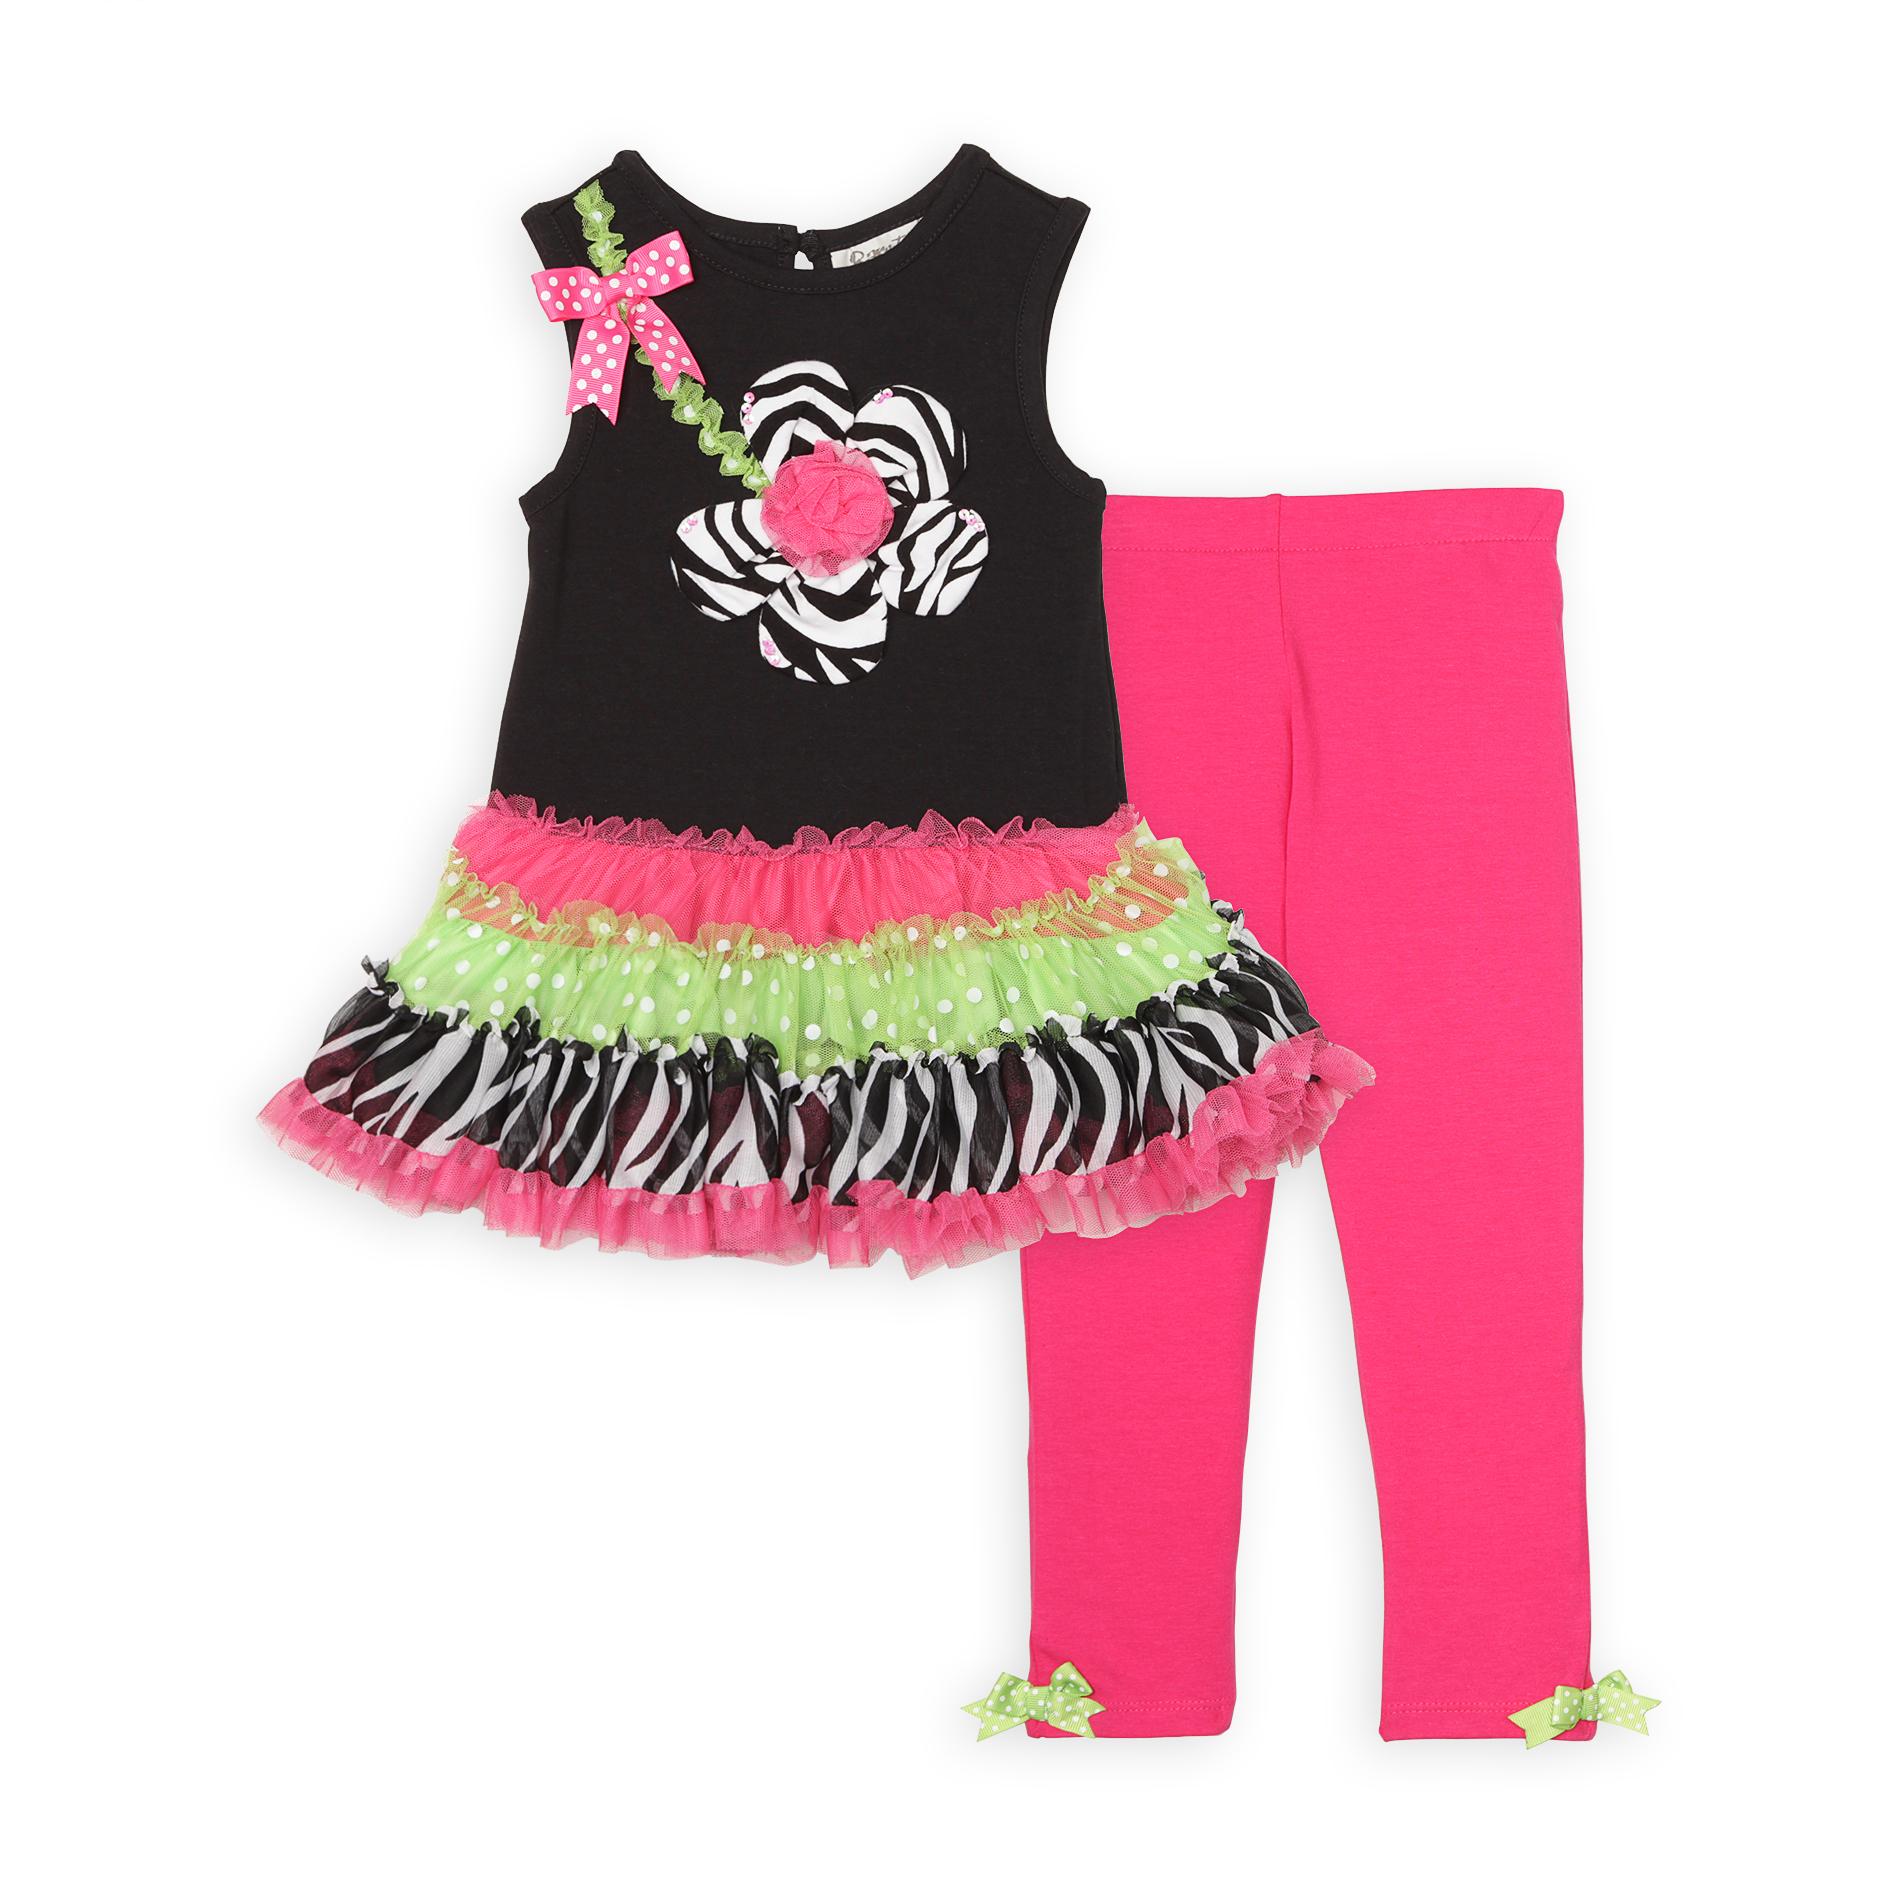 Rare Too Toddler Girl's Tunic Top & Leggings - Floral & Zebra Print